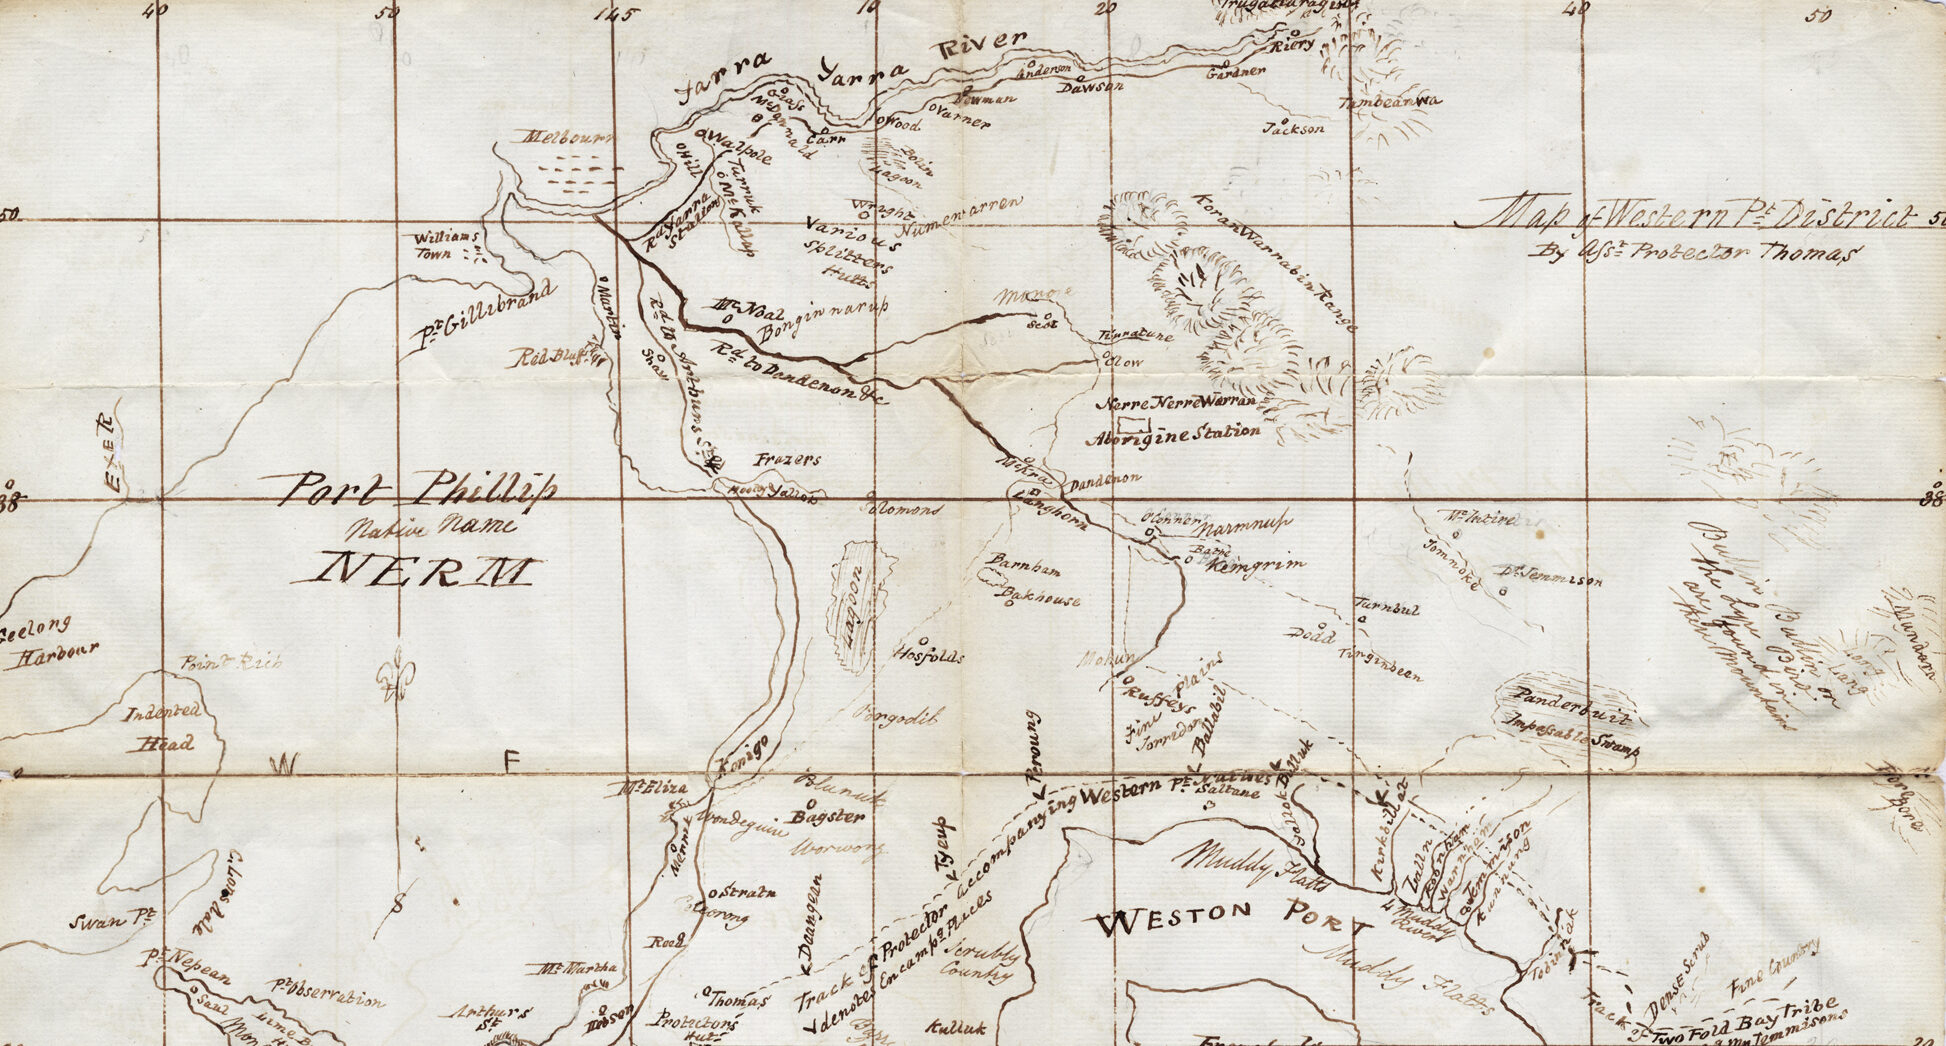 William Thomas, Map of Port Phillip, 1840, showing ‘Narre Narre Worran, Aborigines Station’. (Source: PROV)